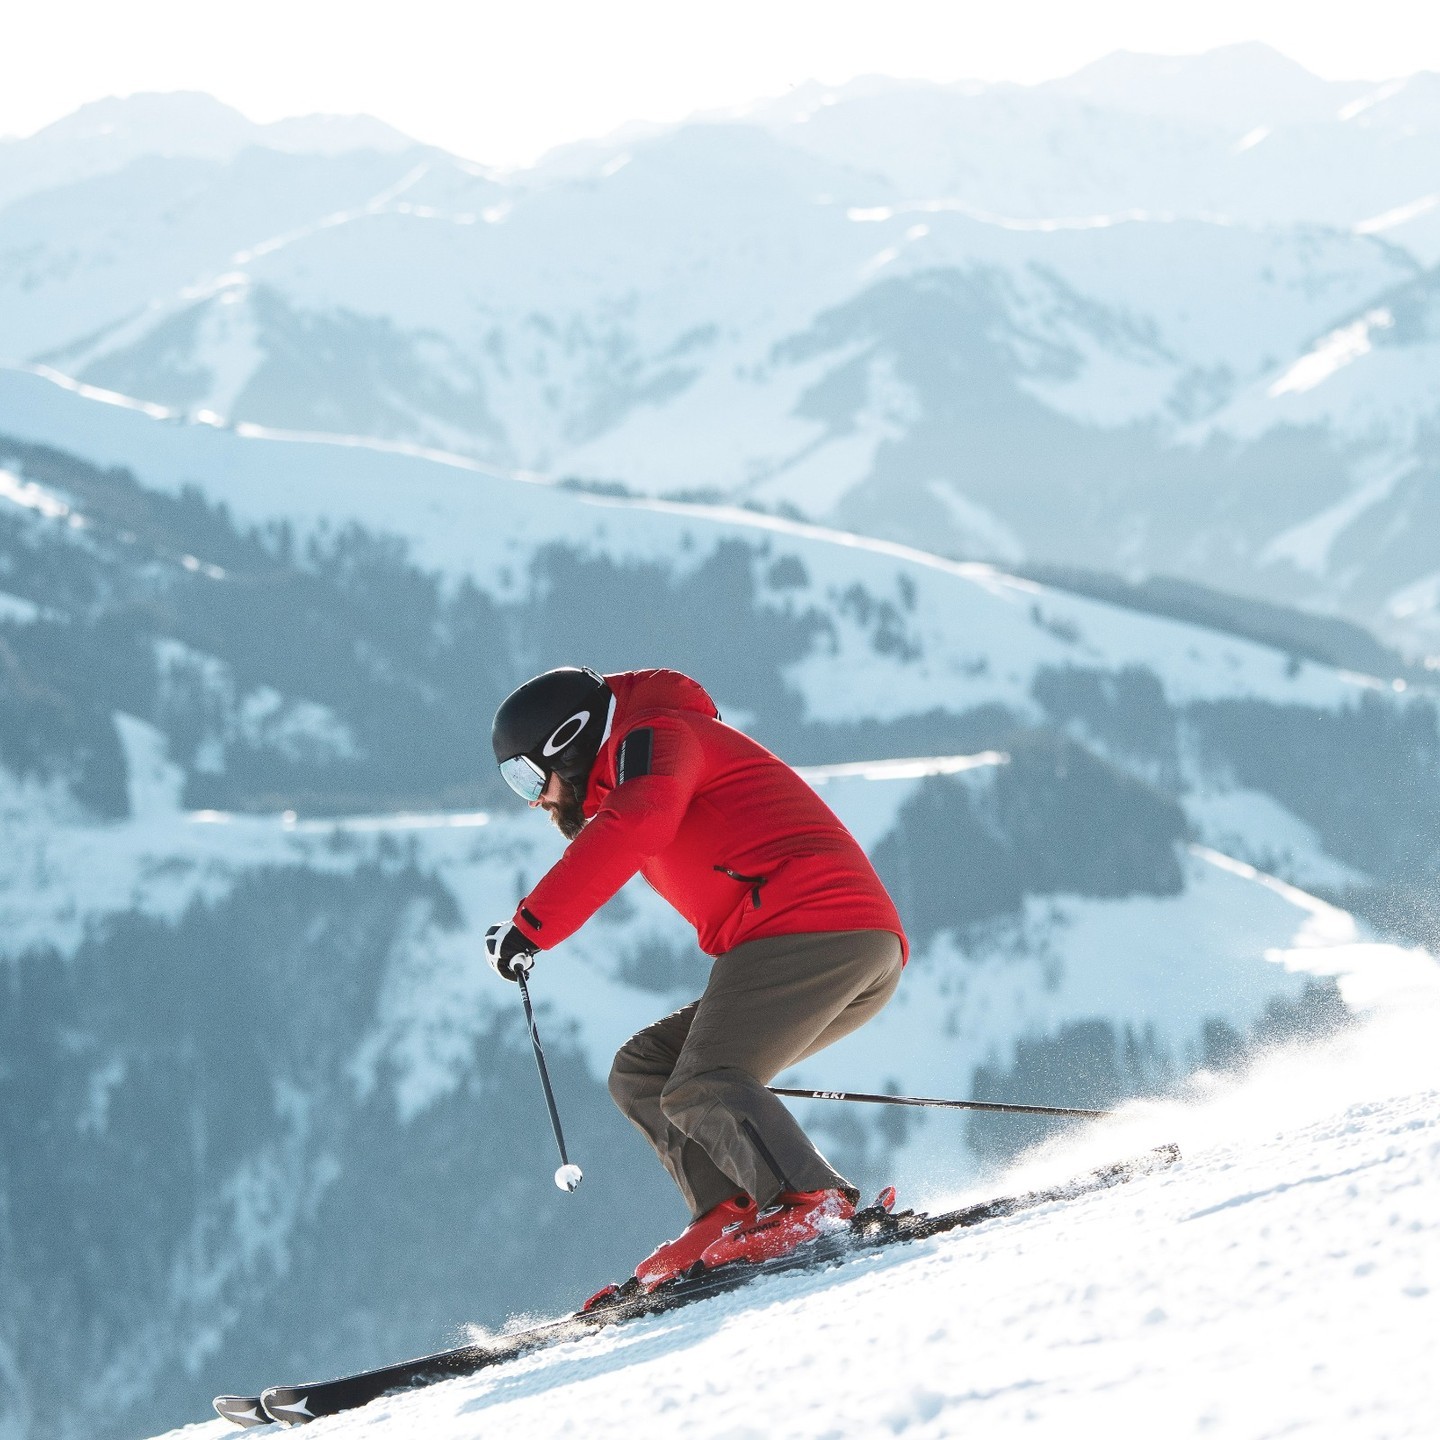 Are you Team ski ⛷️ or snowboard🏂🏽?